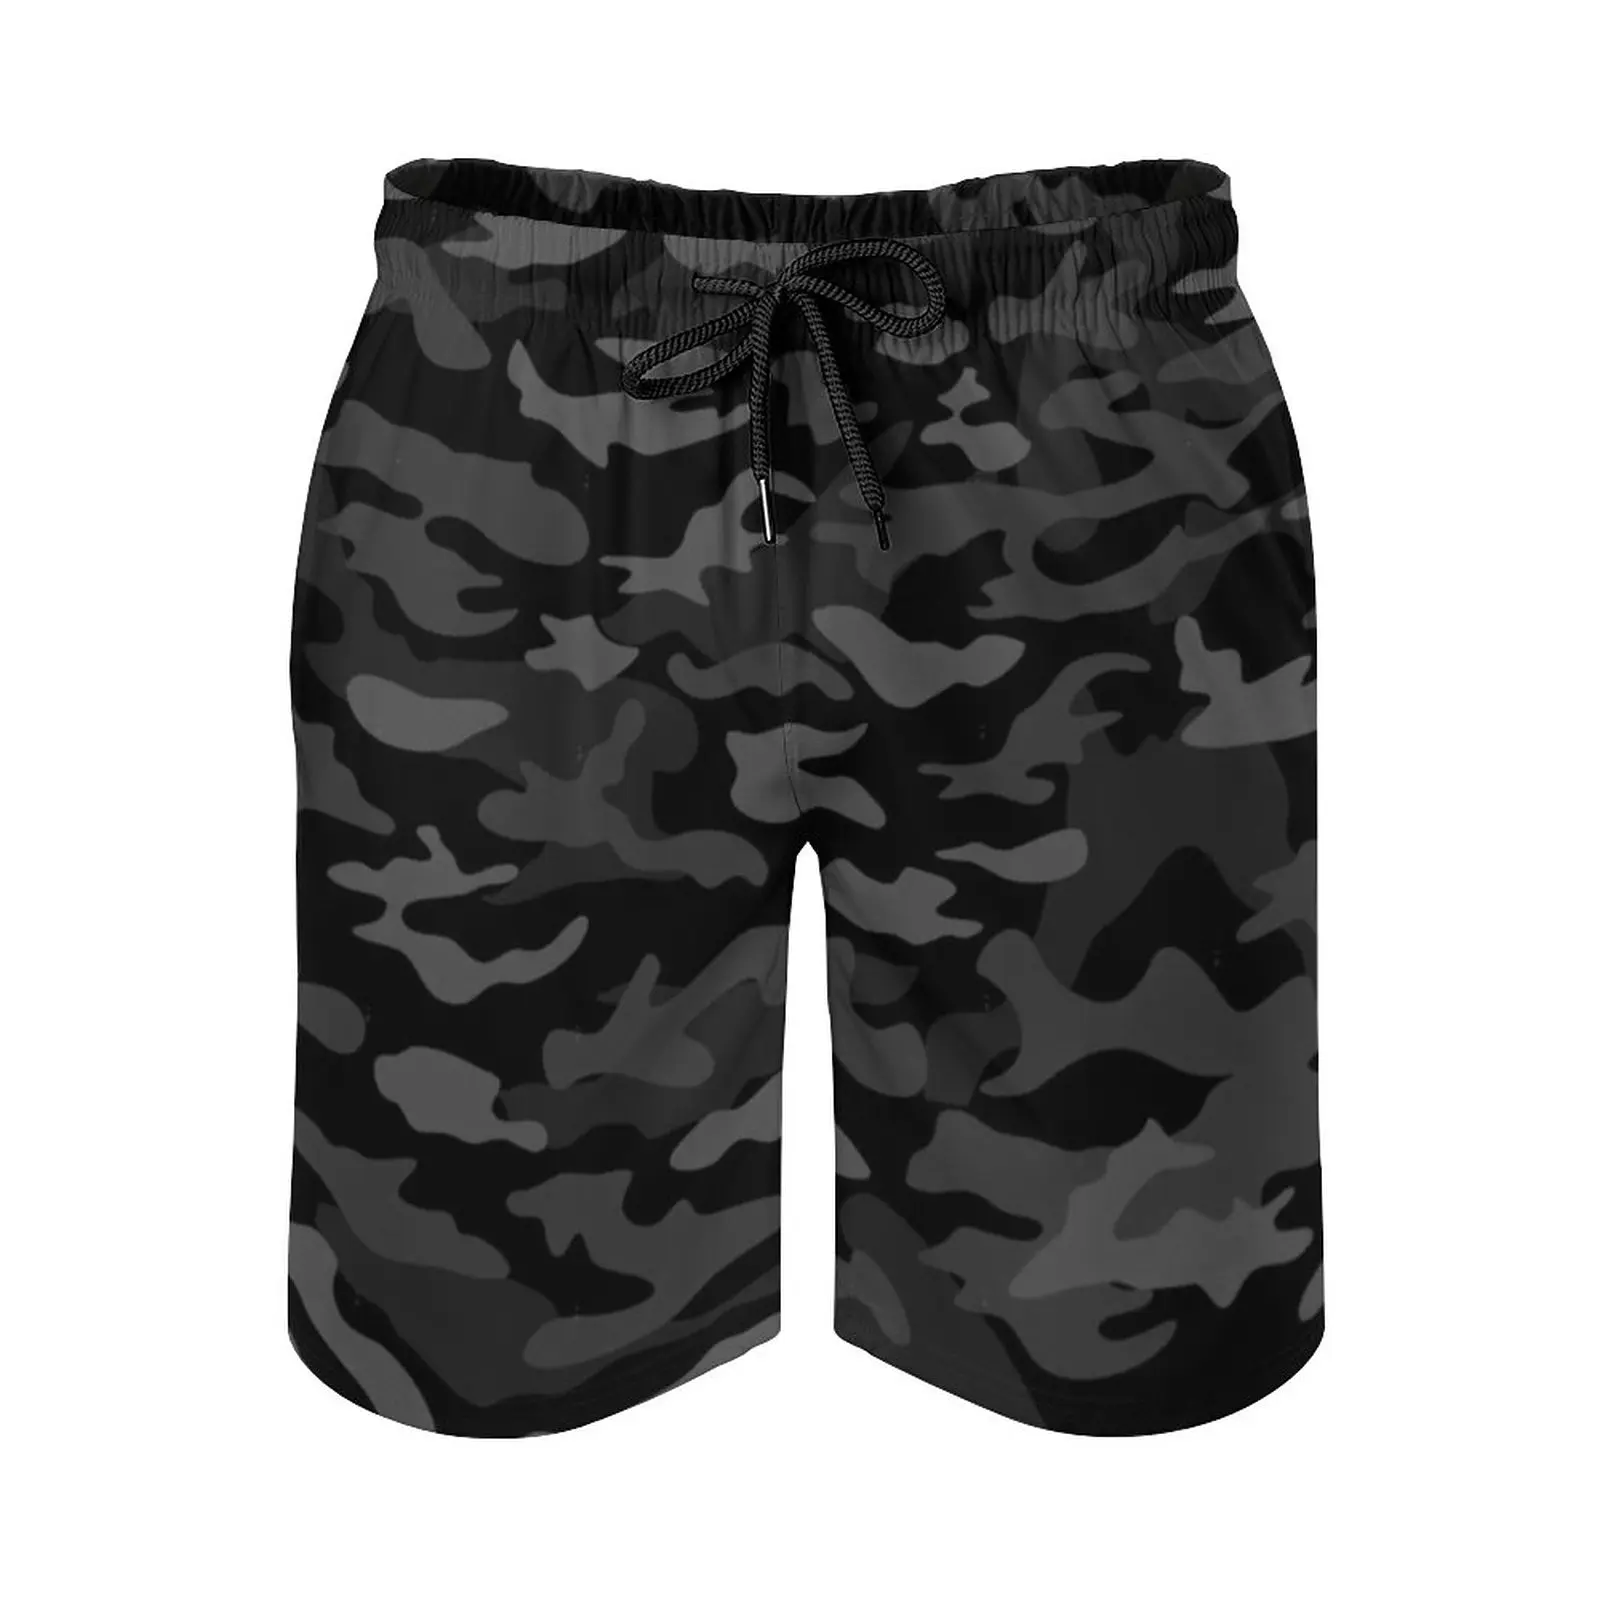 

New Age Black Camouflage Design Men's Beach Shorts Board Shorts Bermuda Surfing Swim Shorts Army Design Camouflage Dark